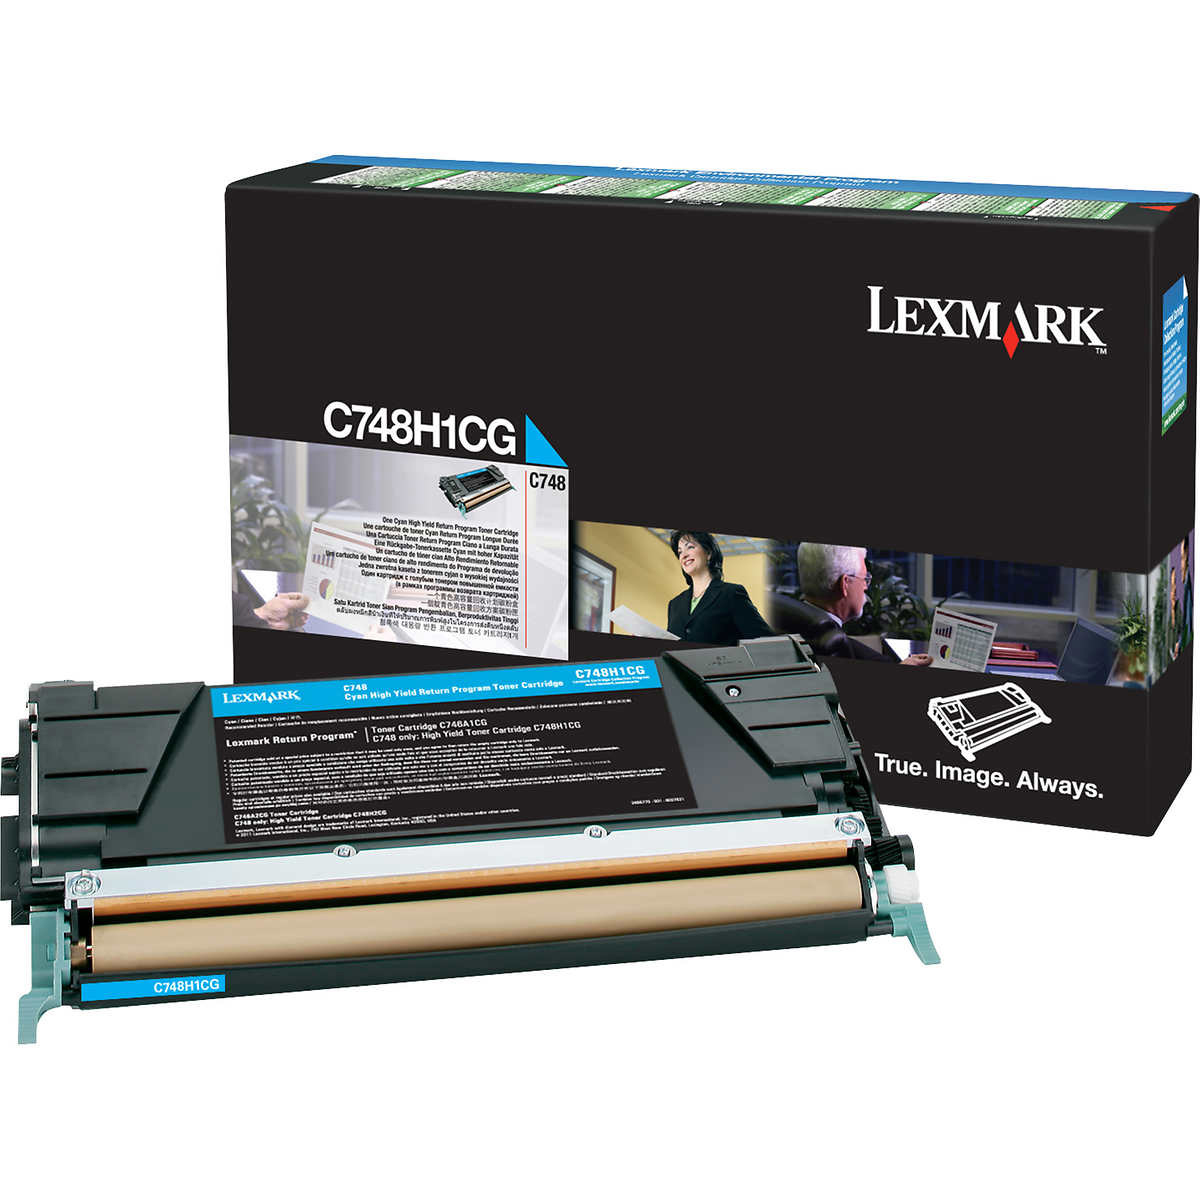 Original Lexmark C748H1CG Cyan High Capacity Toner Cartridge (C748H3CG)